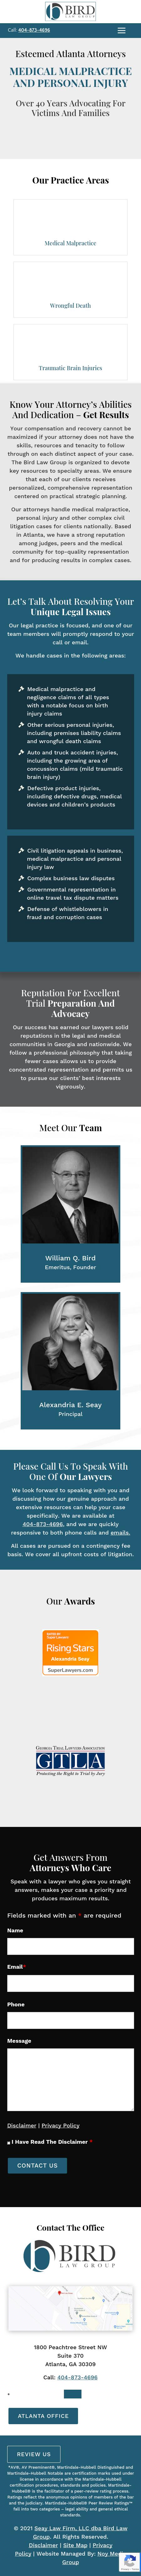 Bird Law Group - Atlanta GA Lawyers